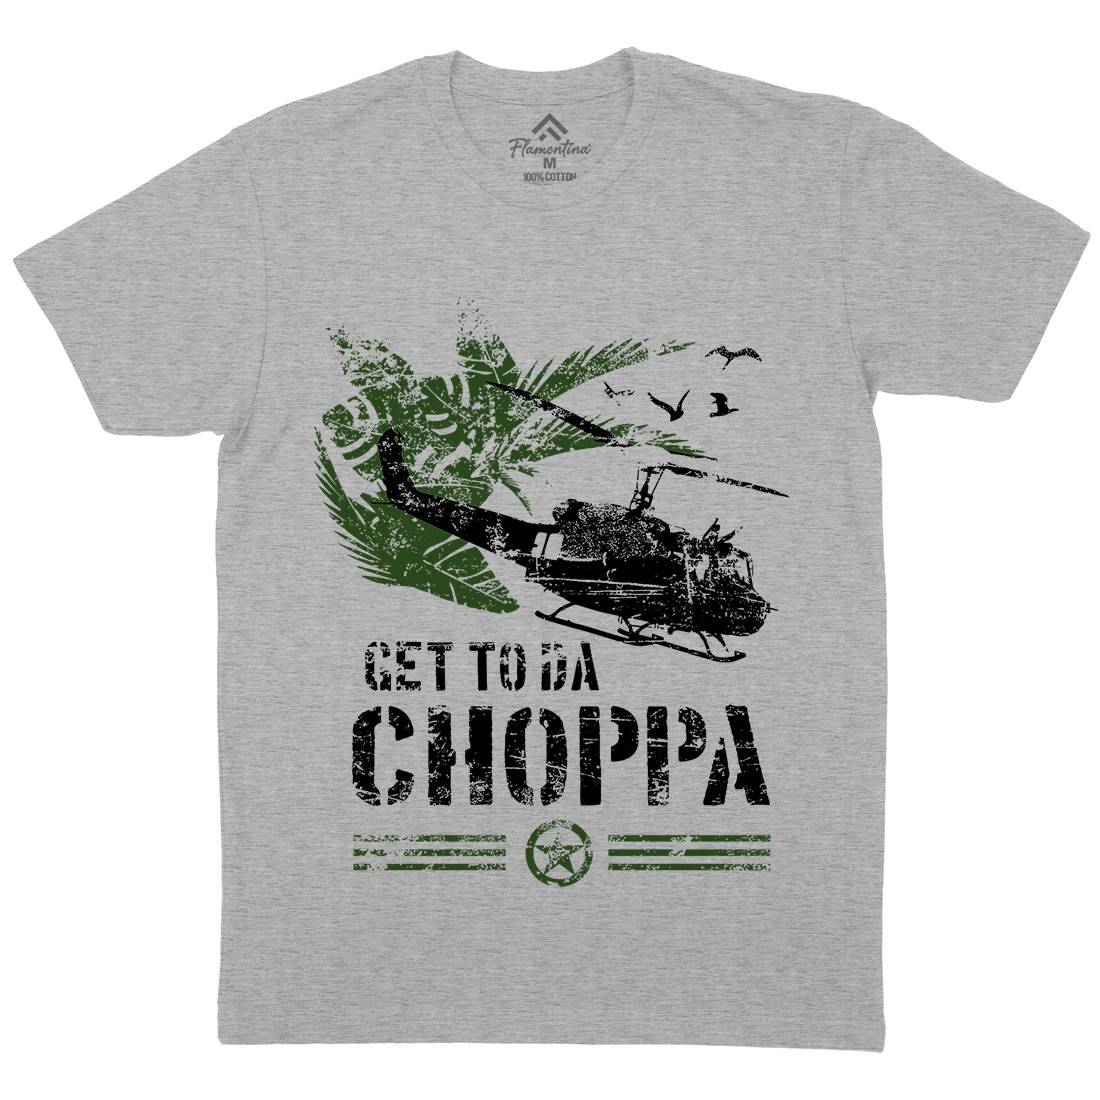 Get To The Chopper Mens Organic Crew Neck T-Shirt Army D235